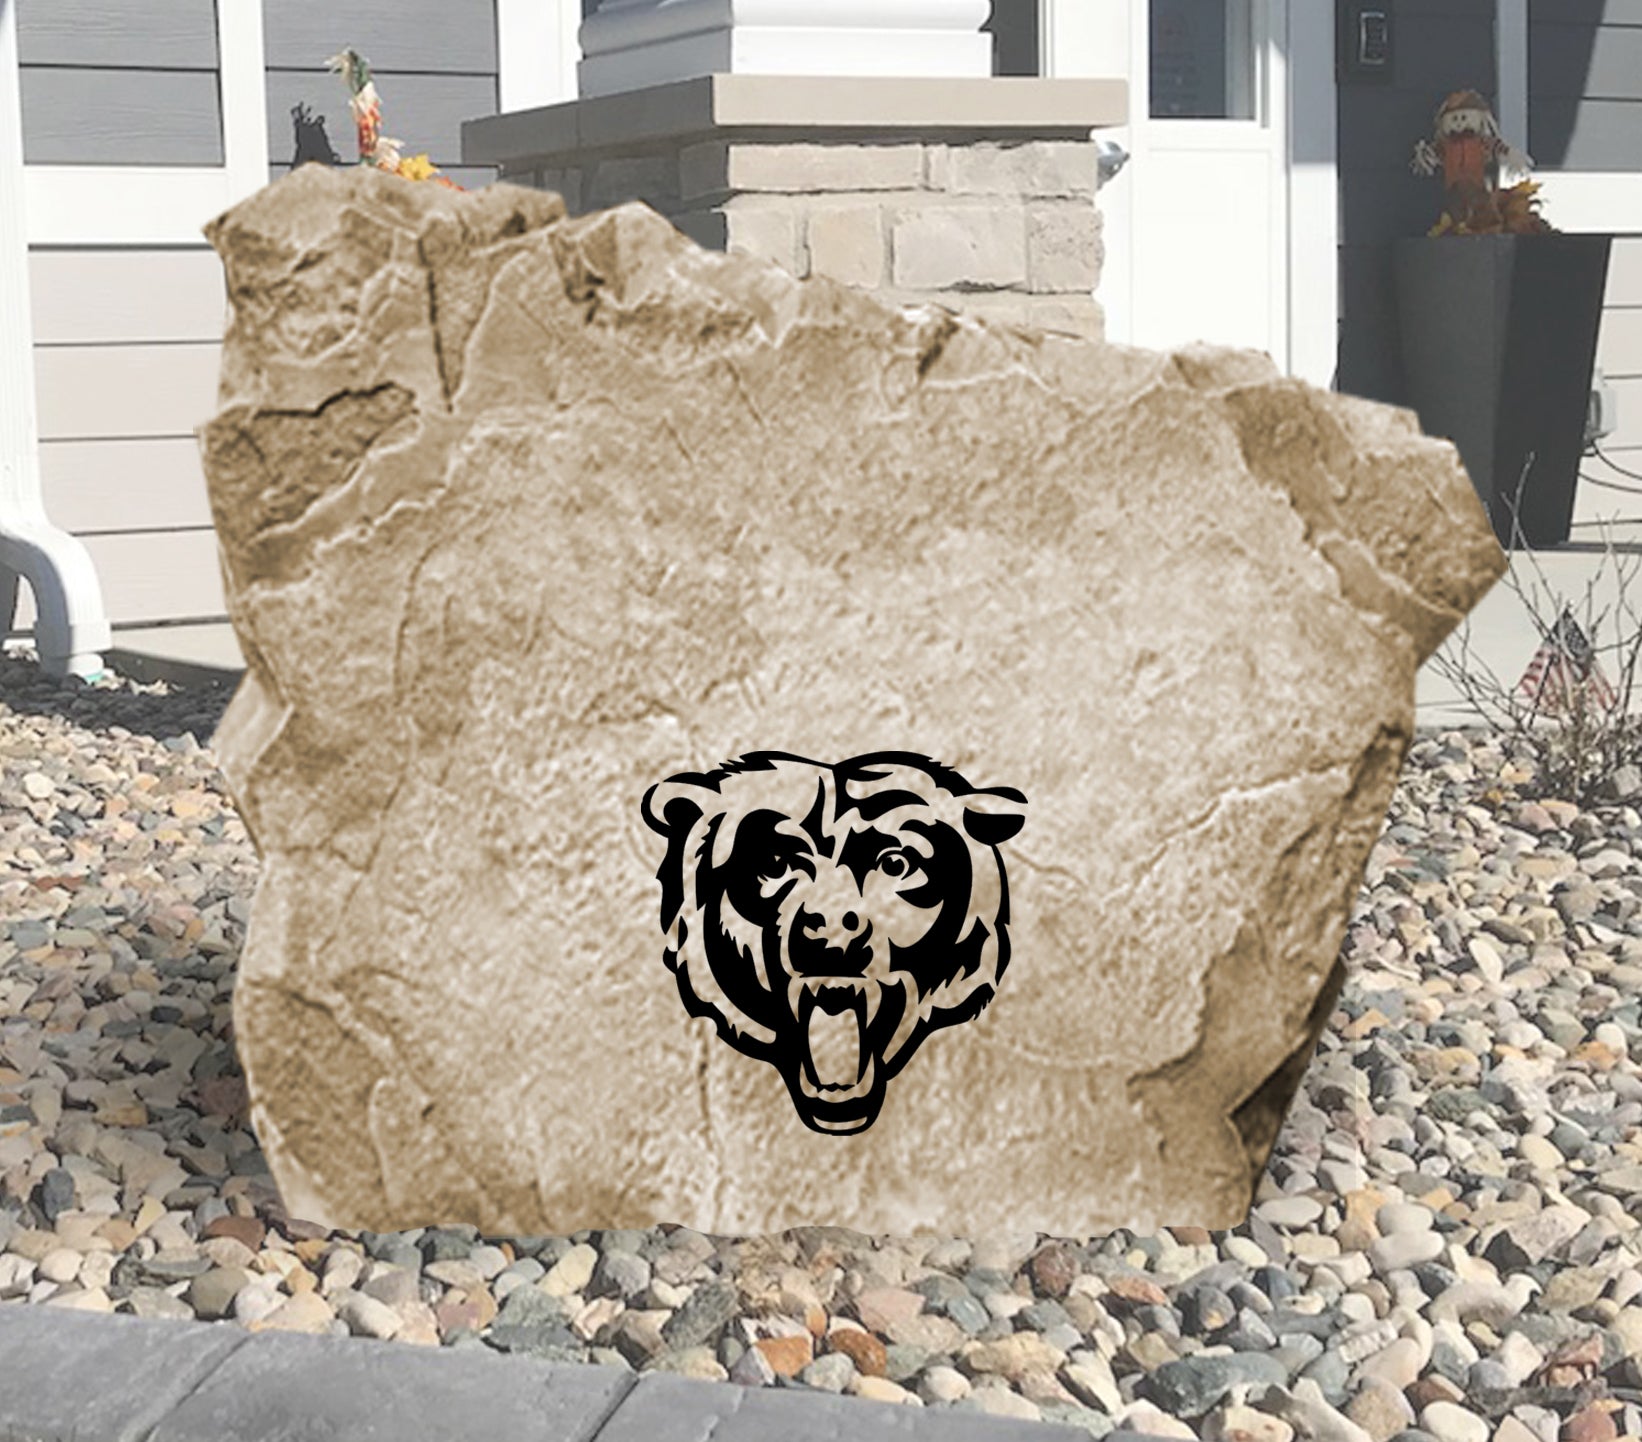 Chicago Bears Design-A-Stone Landscape Art Address Stone